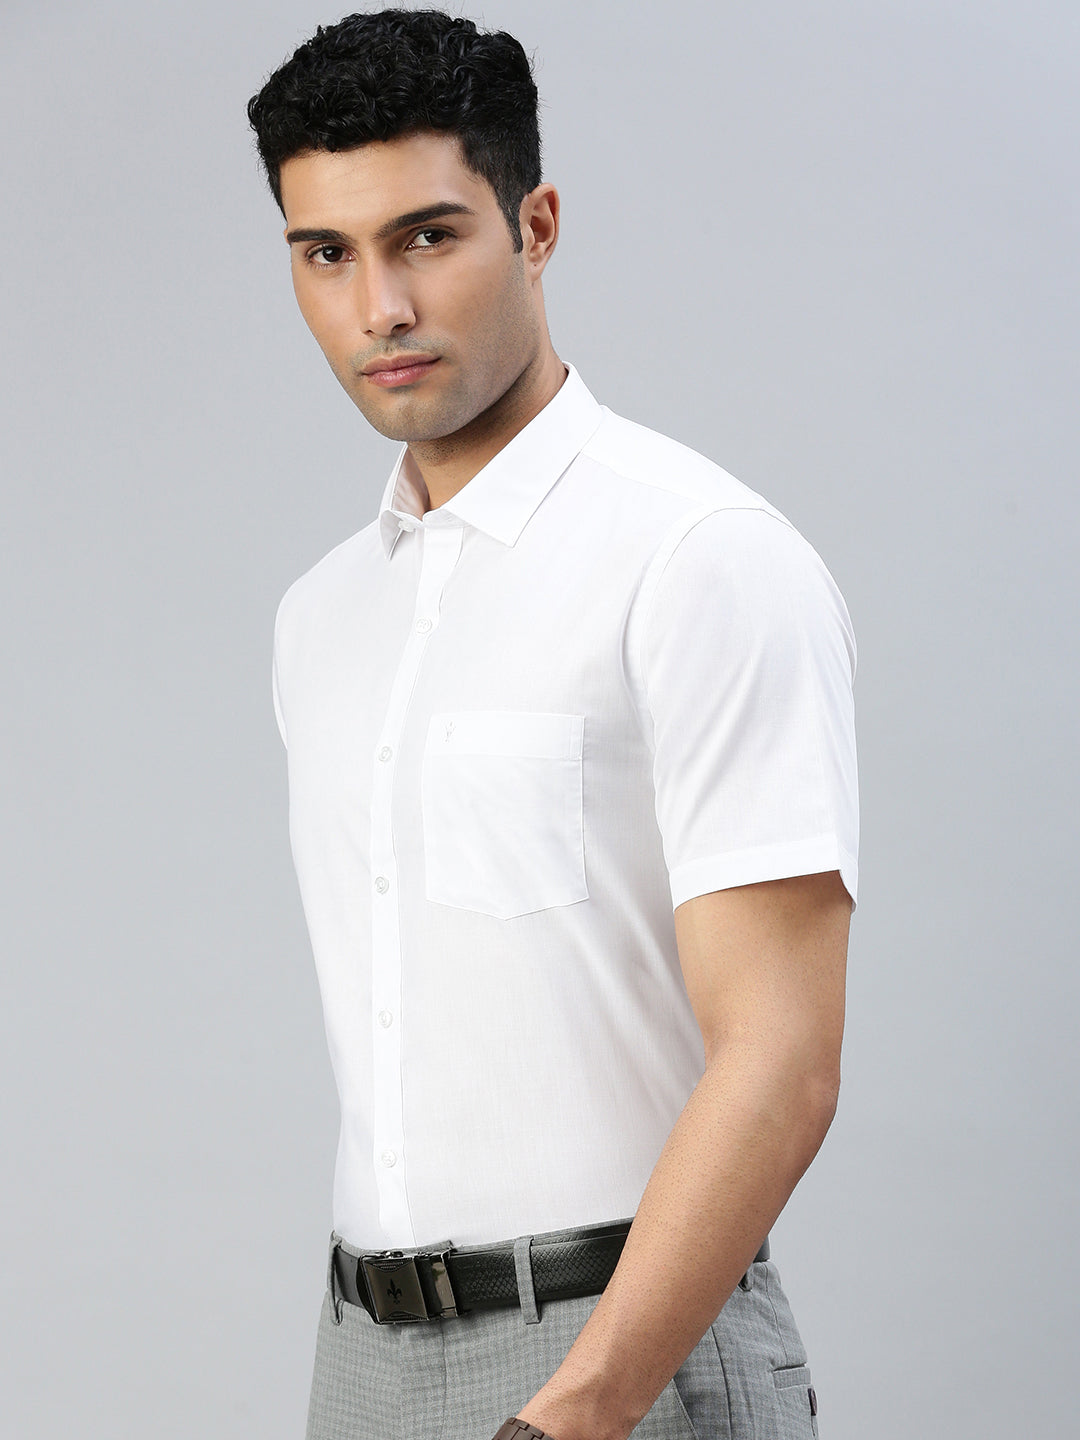 Mens Cotton Smart Fit White  Shirt Trendy